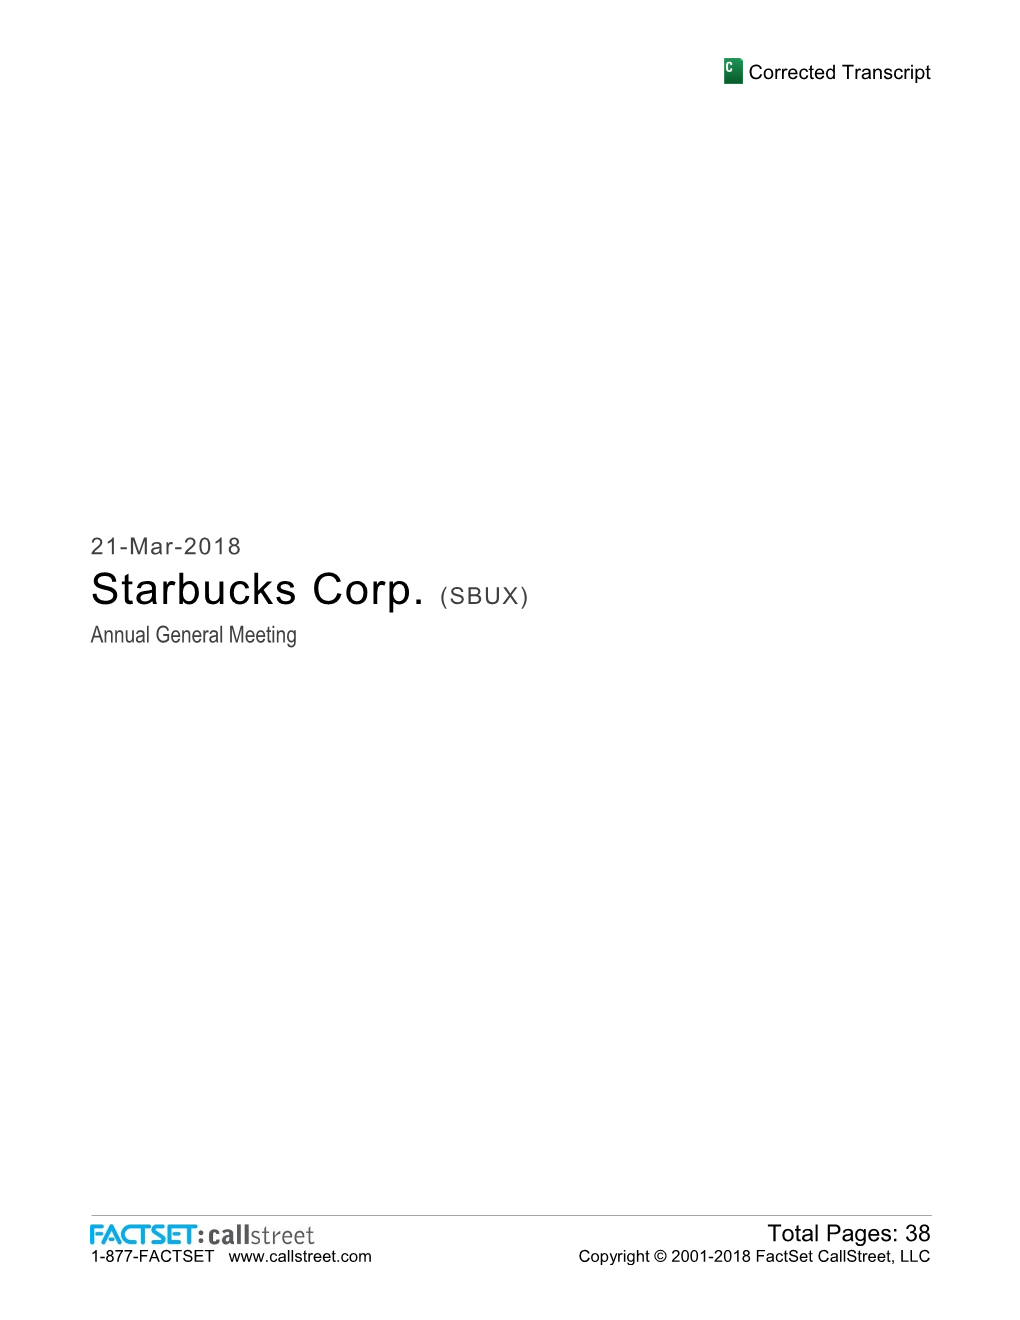 Starbucks Corp. (SBUX) Annual General Meeting